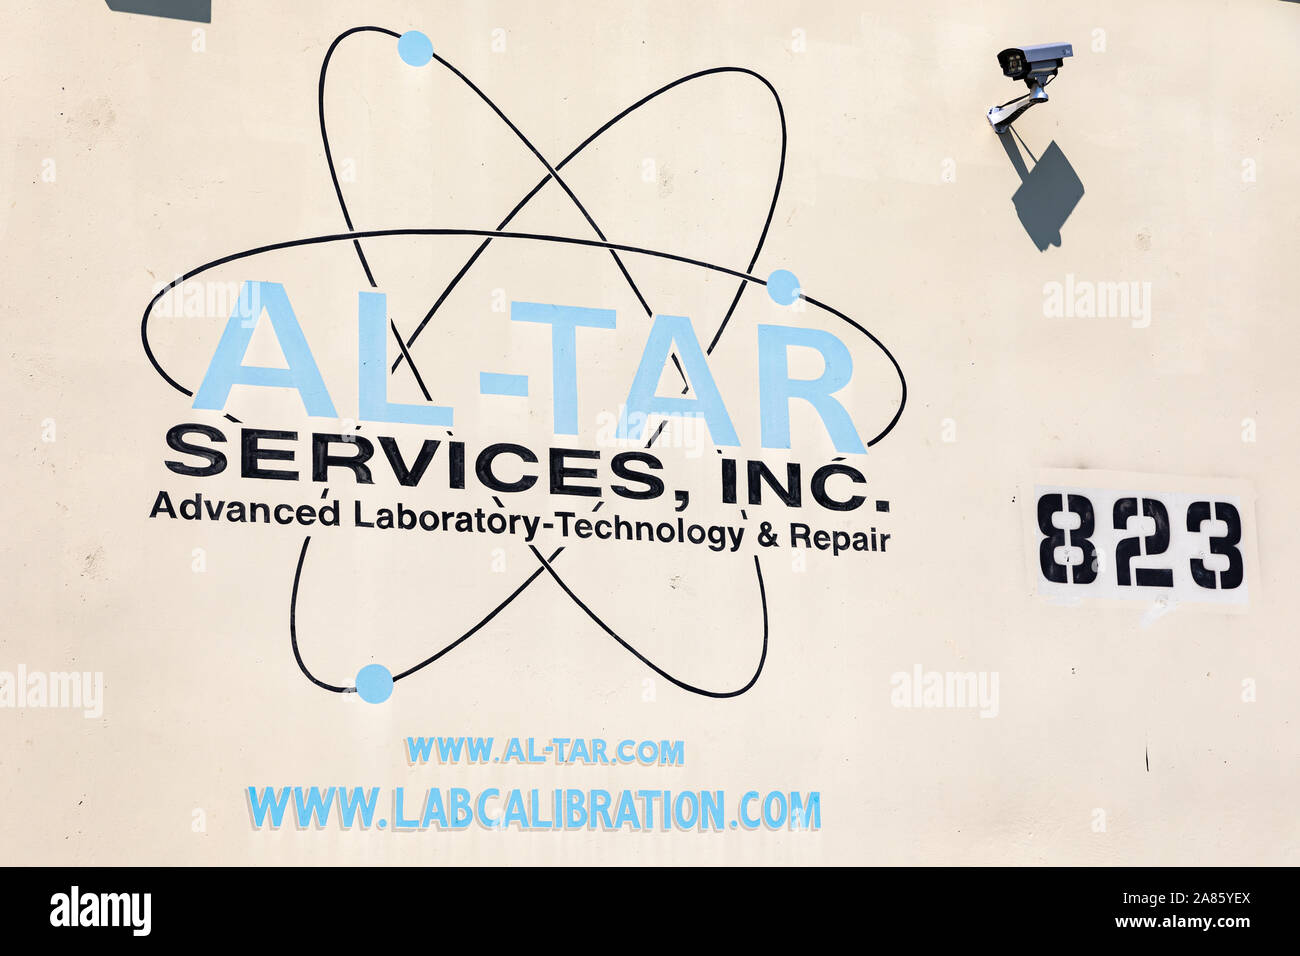 Al-Tar Services, Inc., Advanced Laboratory-Technologies & Repair, Sunnyvale, California Stock Photo